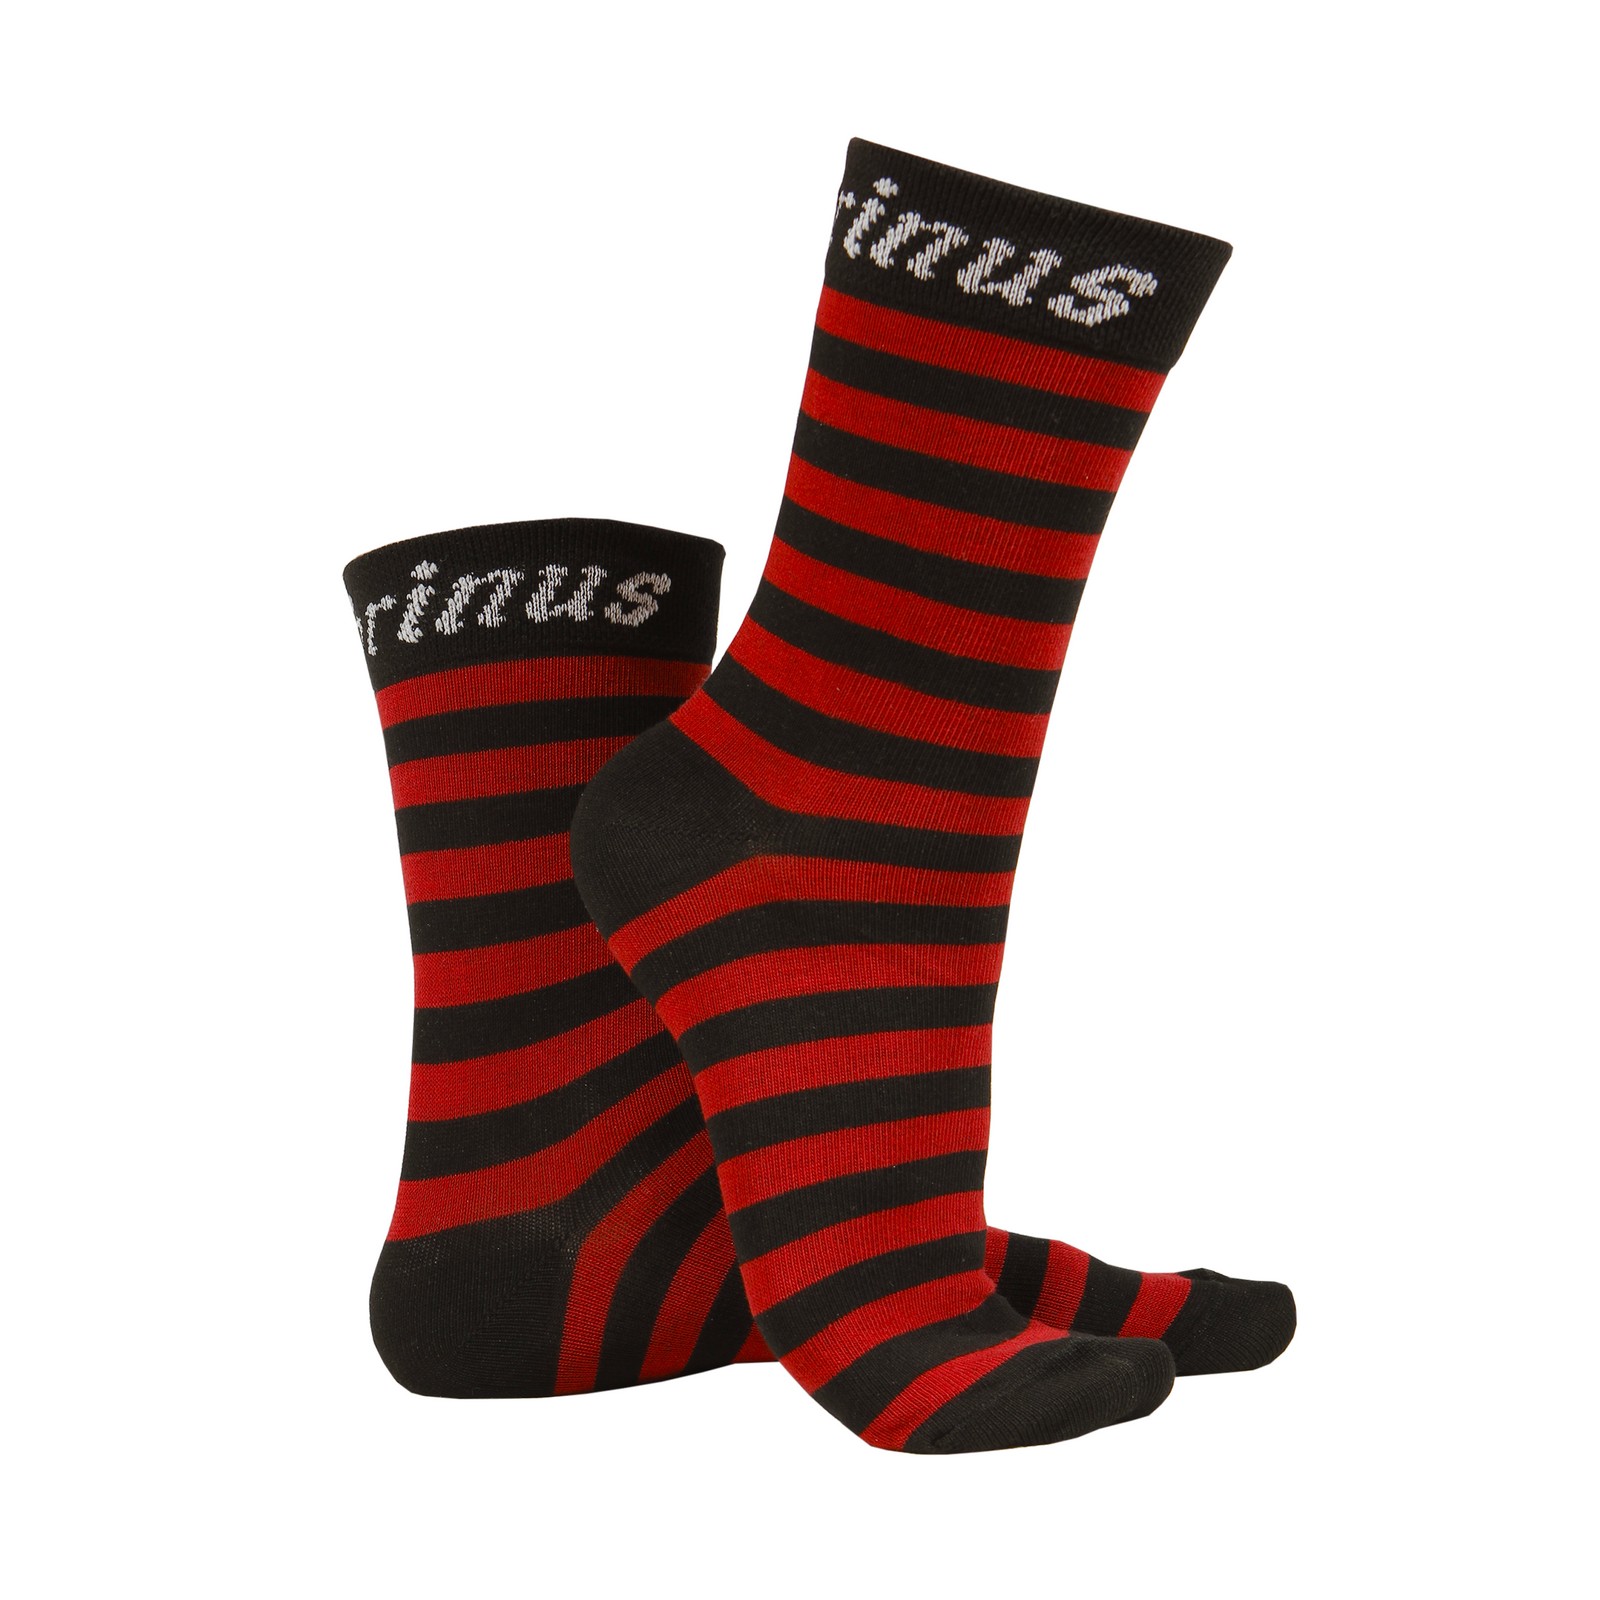 Gambrinus striped socks